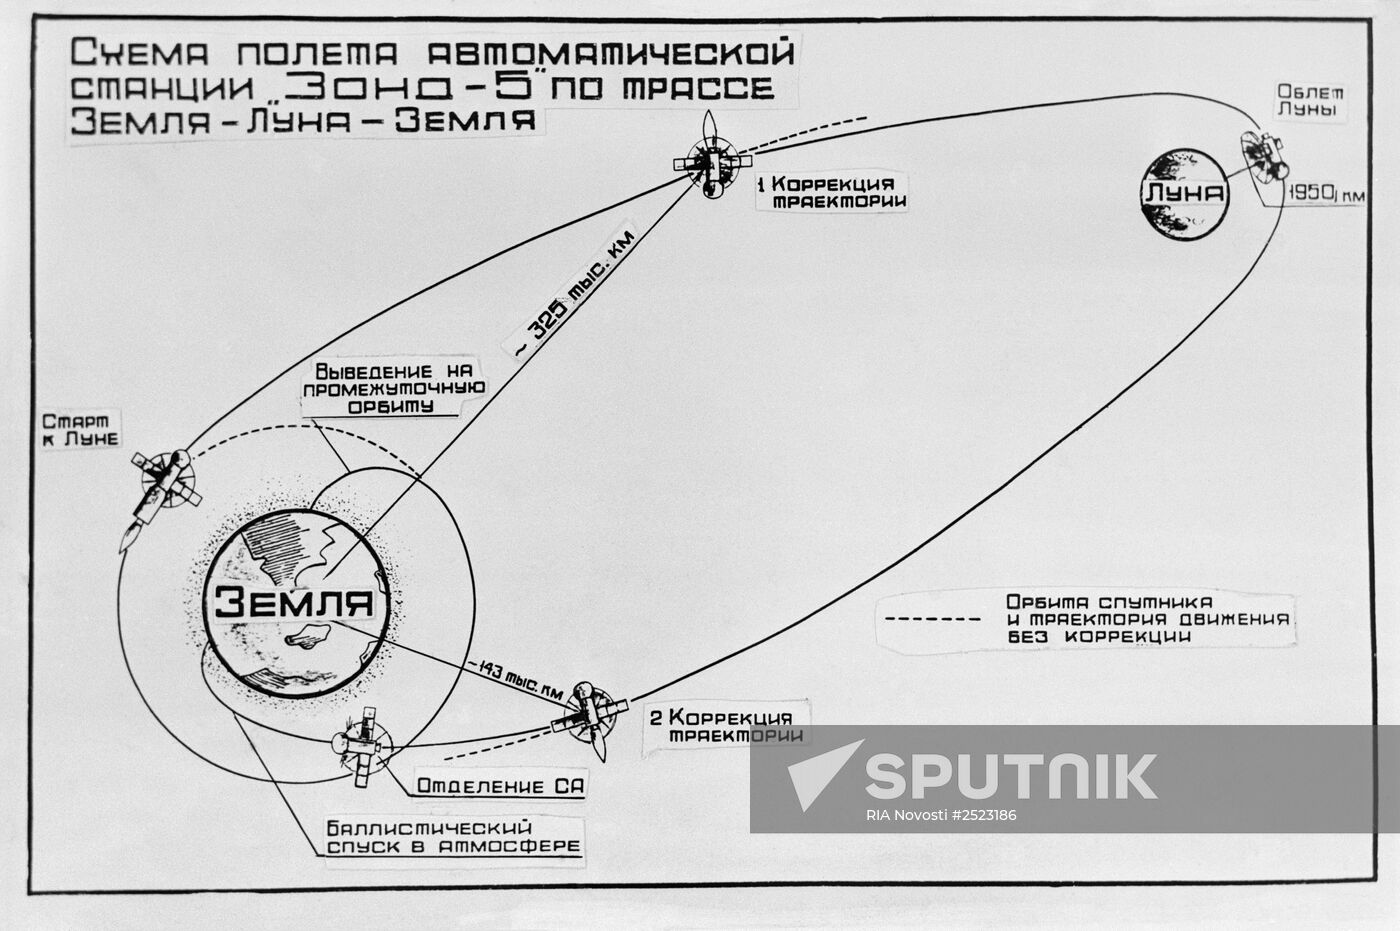 Fllight path diagram of AMC Zond-5